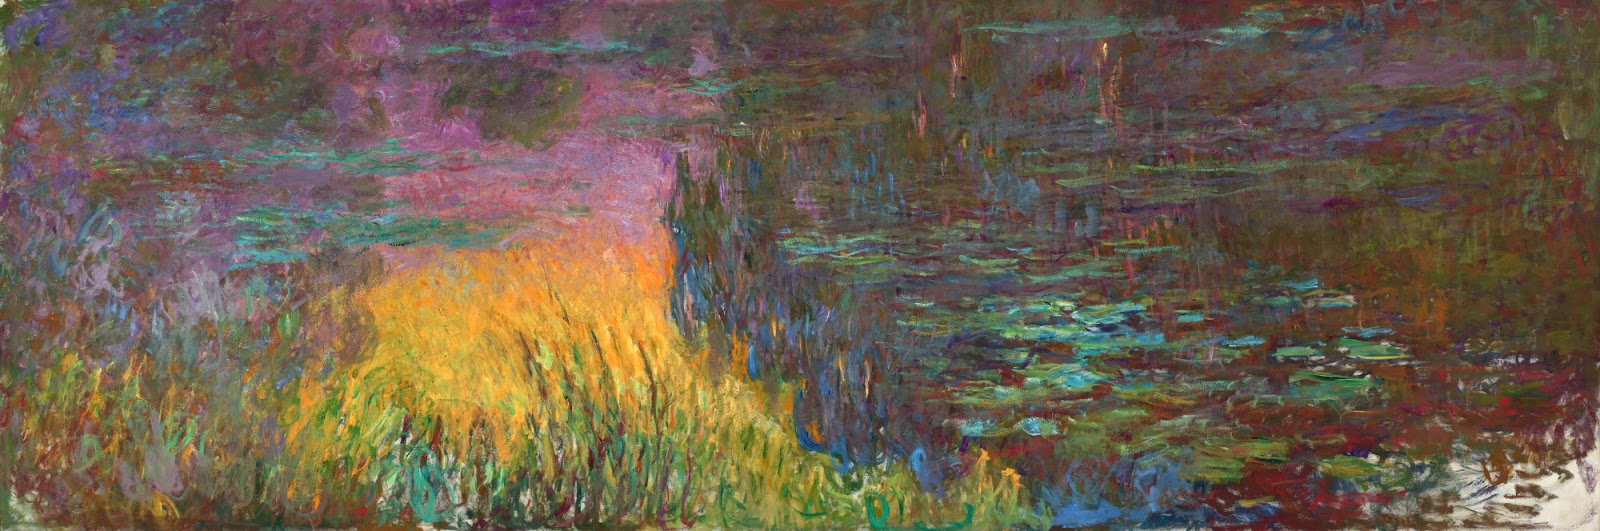 Claude+Monet-1840-1926 (958).jpg